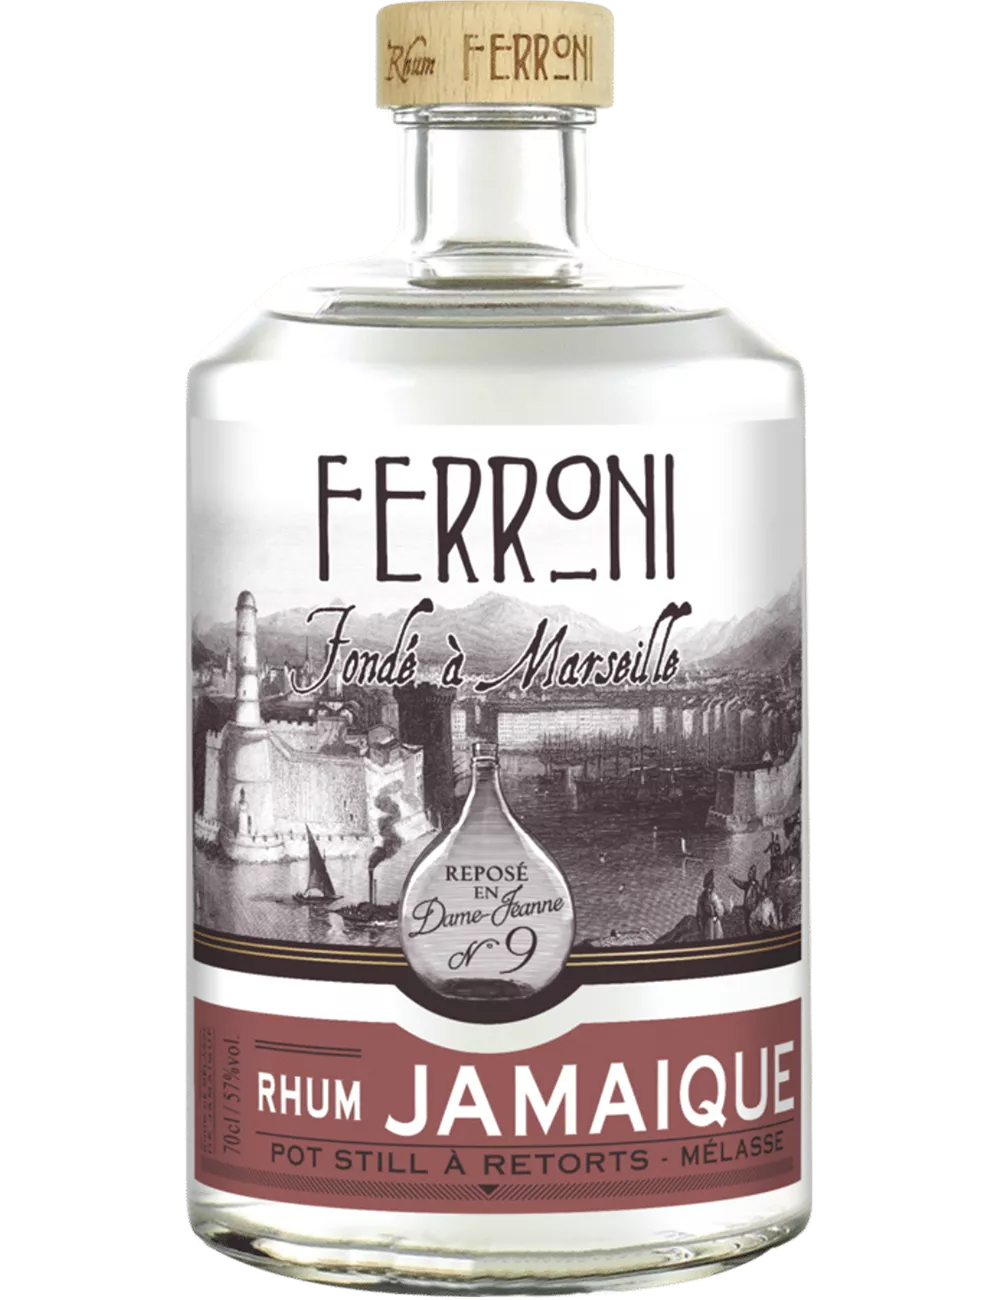 Ferroni - Dame Jeanne - N°9 Jamaïque - Rhum blanc de mélasse